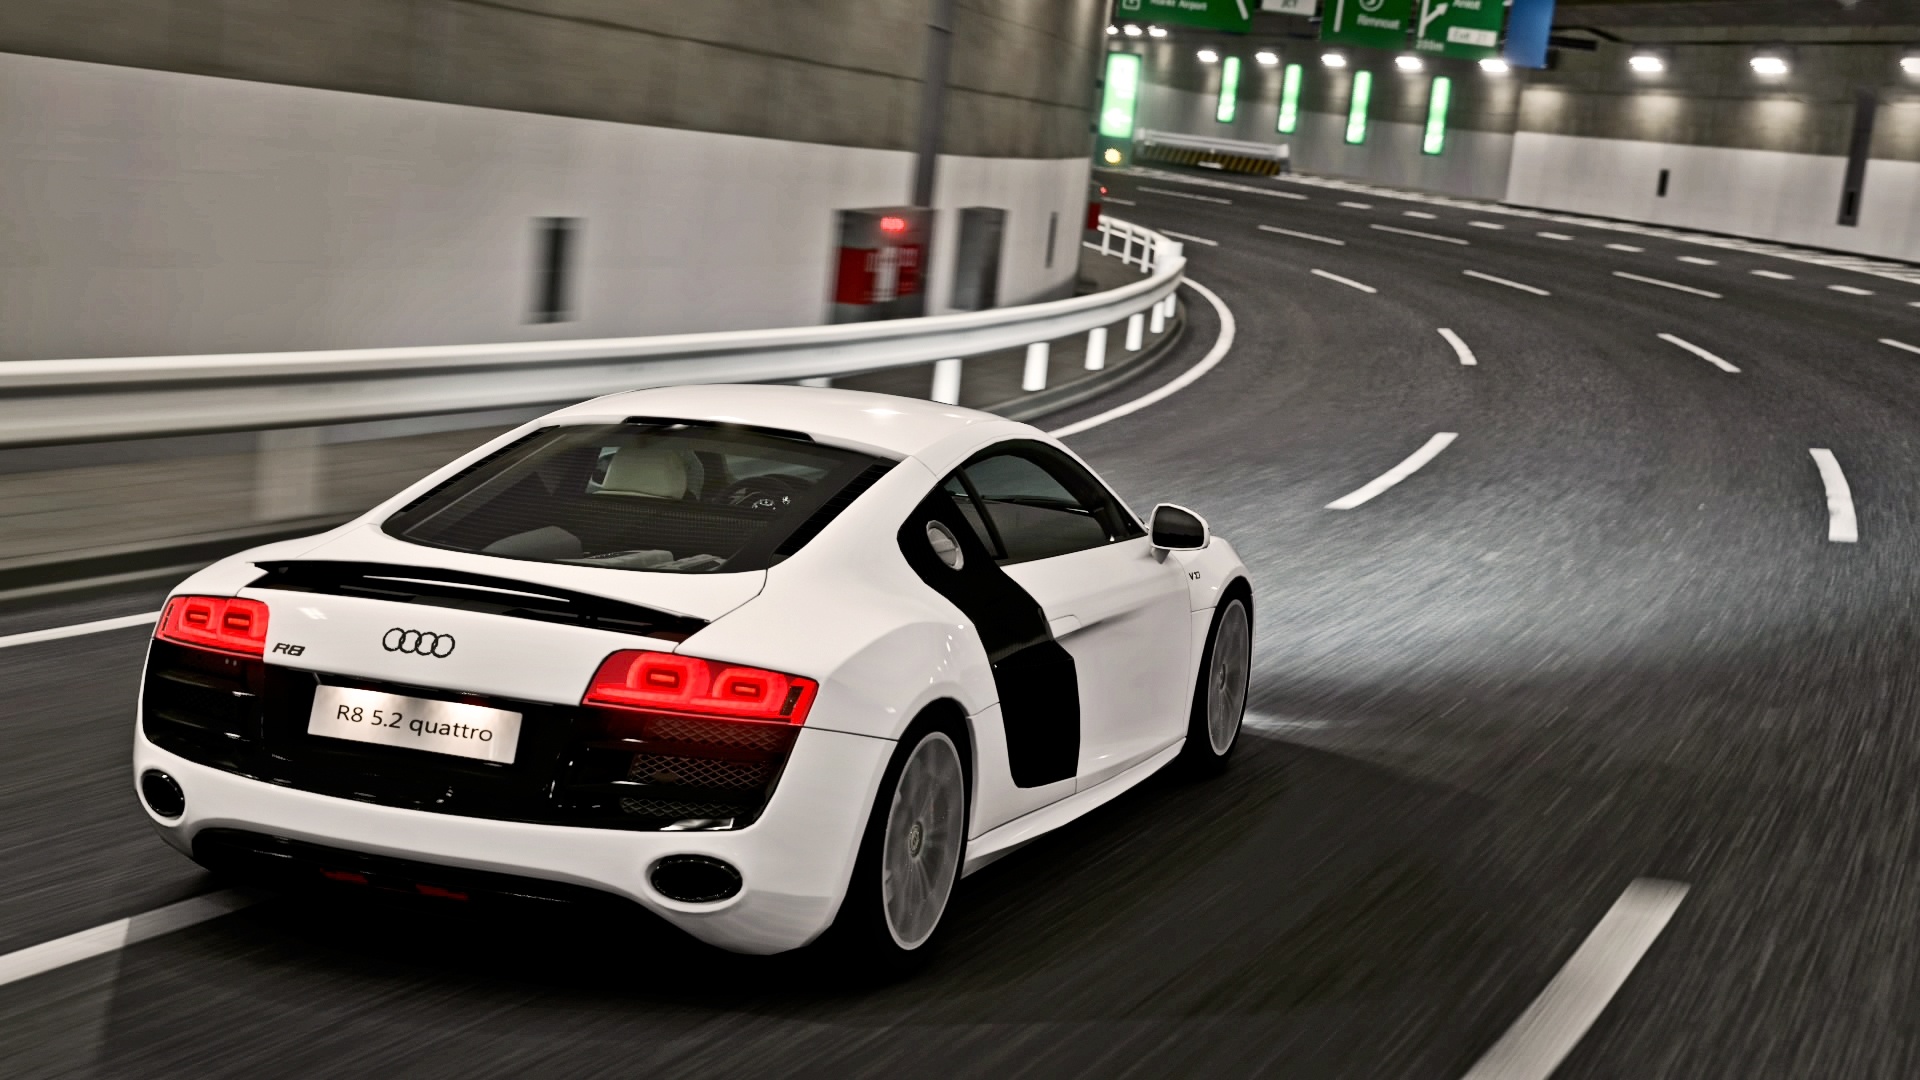 Audi R8 desktop background